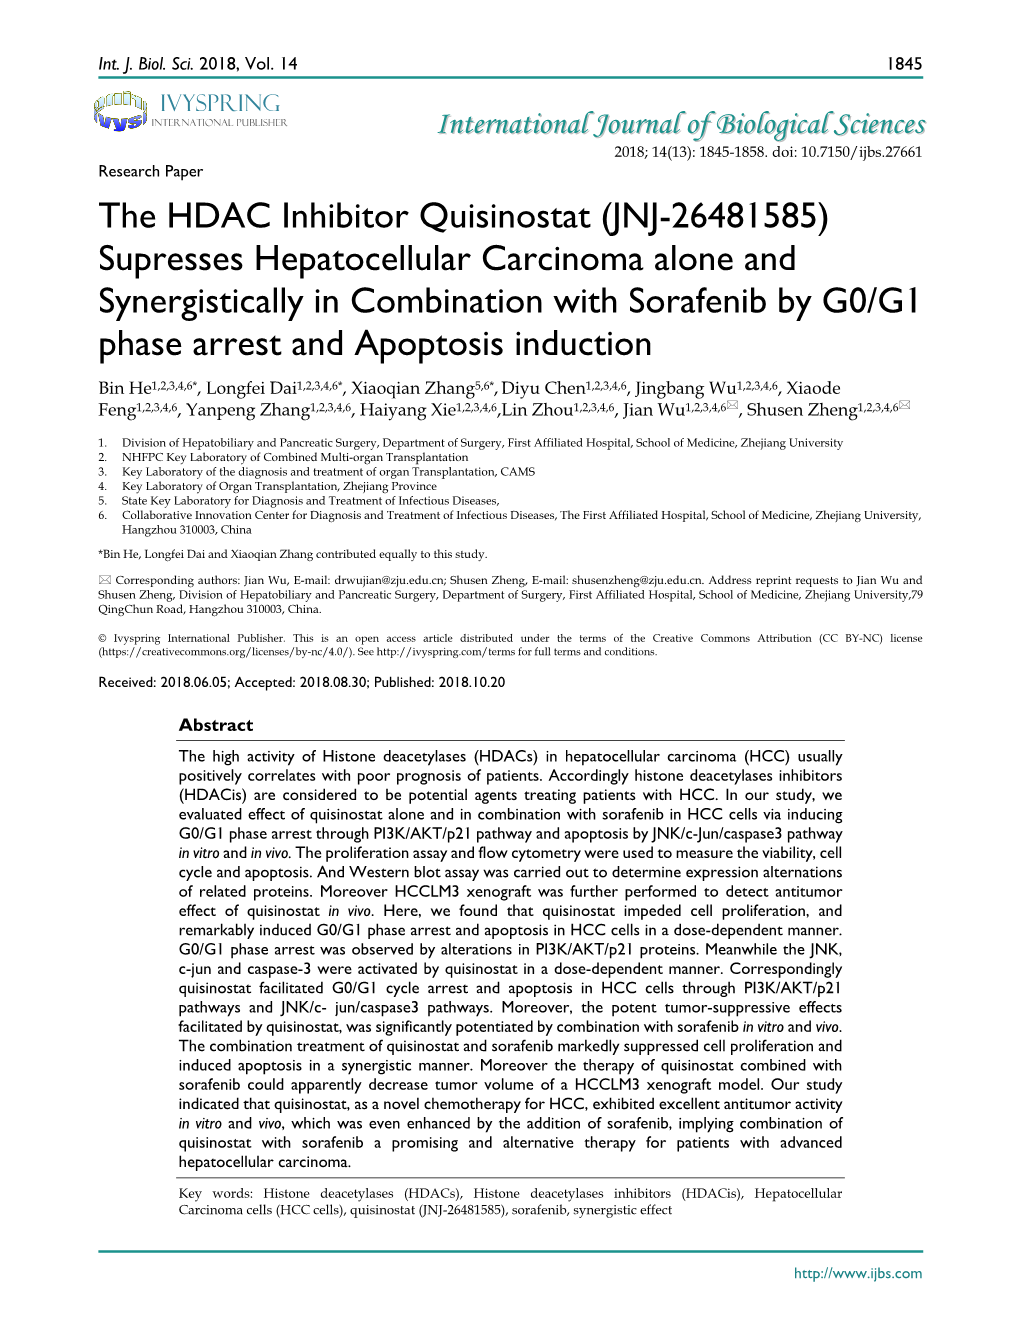 The HDAC Inhibitor Quisinostat